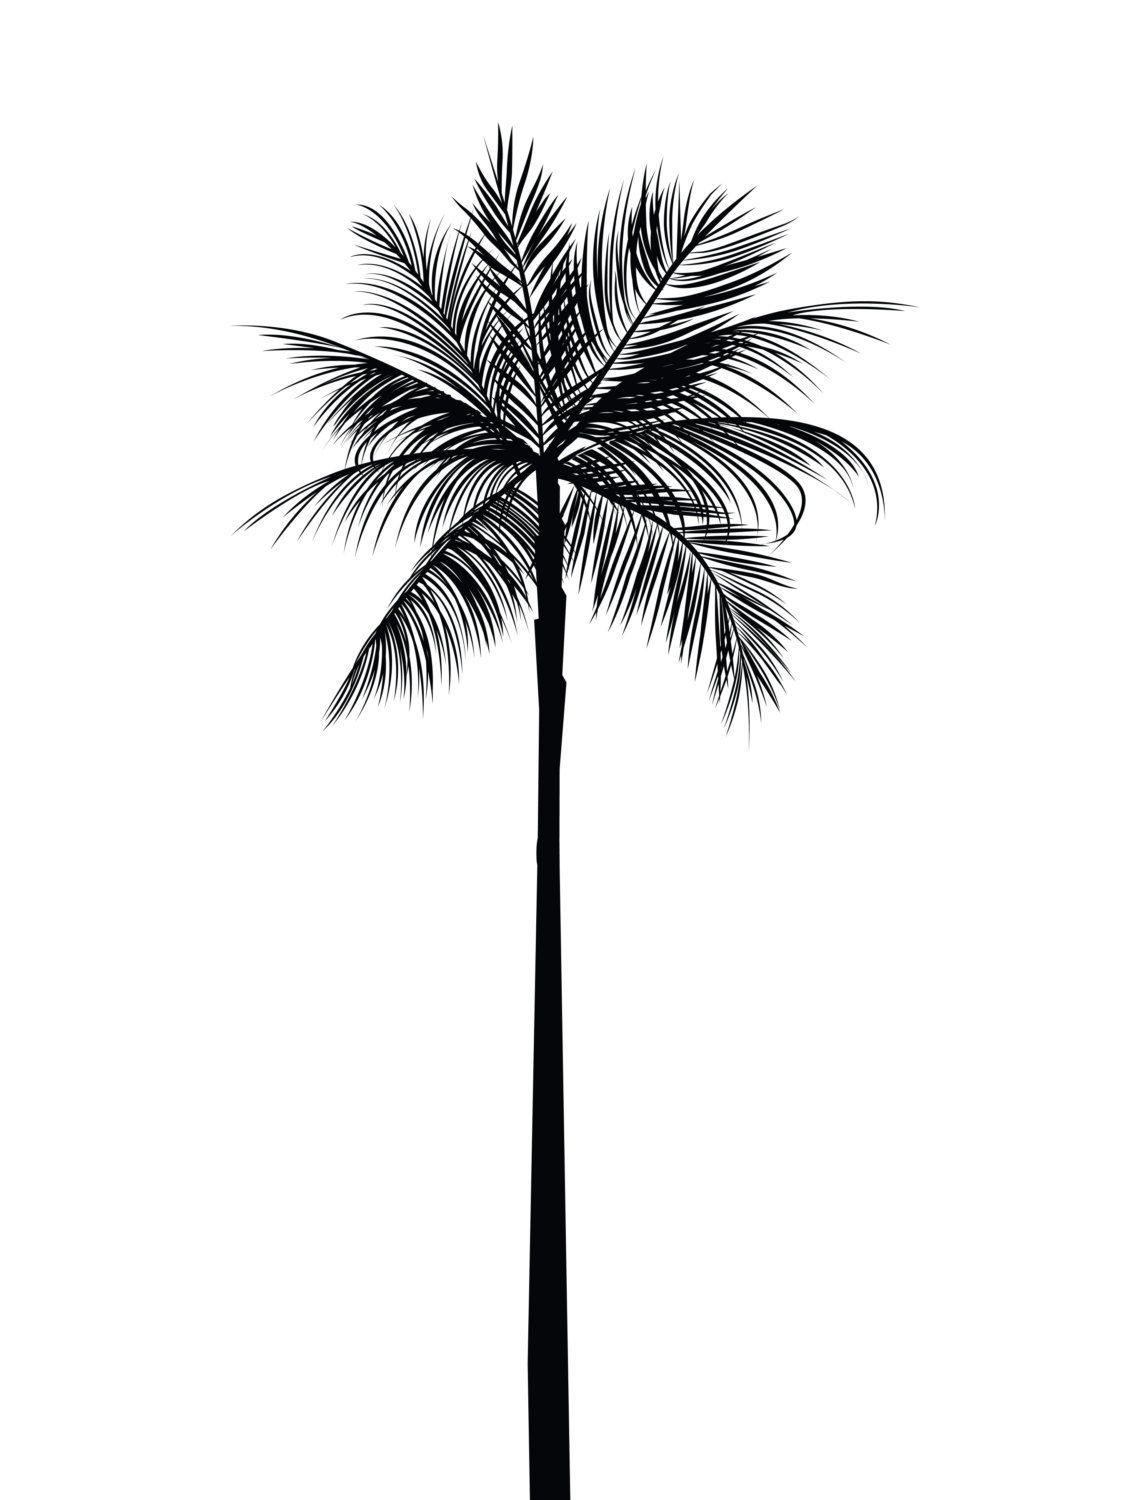 Black and White Palm Tree Logo - Palm Tree Print, Palm Leaves Print, Palm Tree Art, Palm Tree Wall